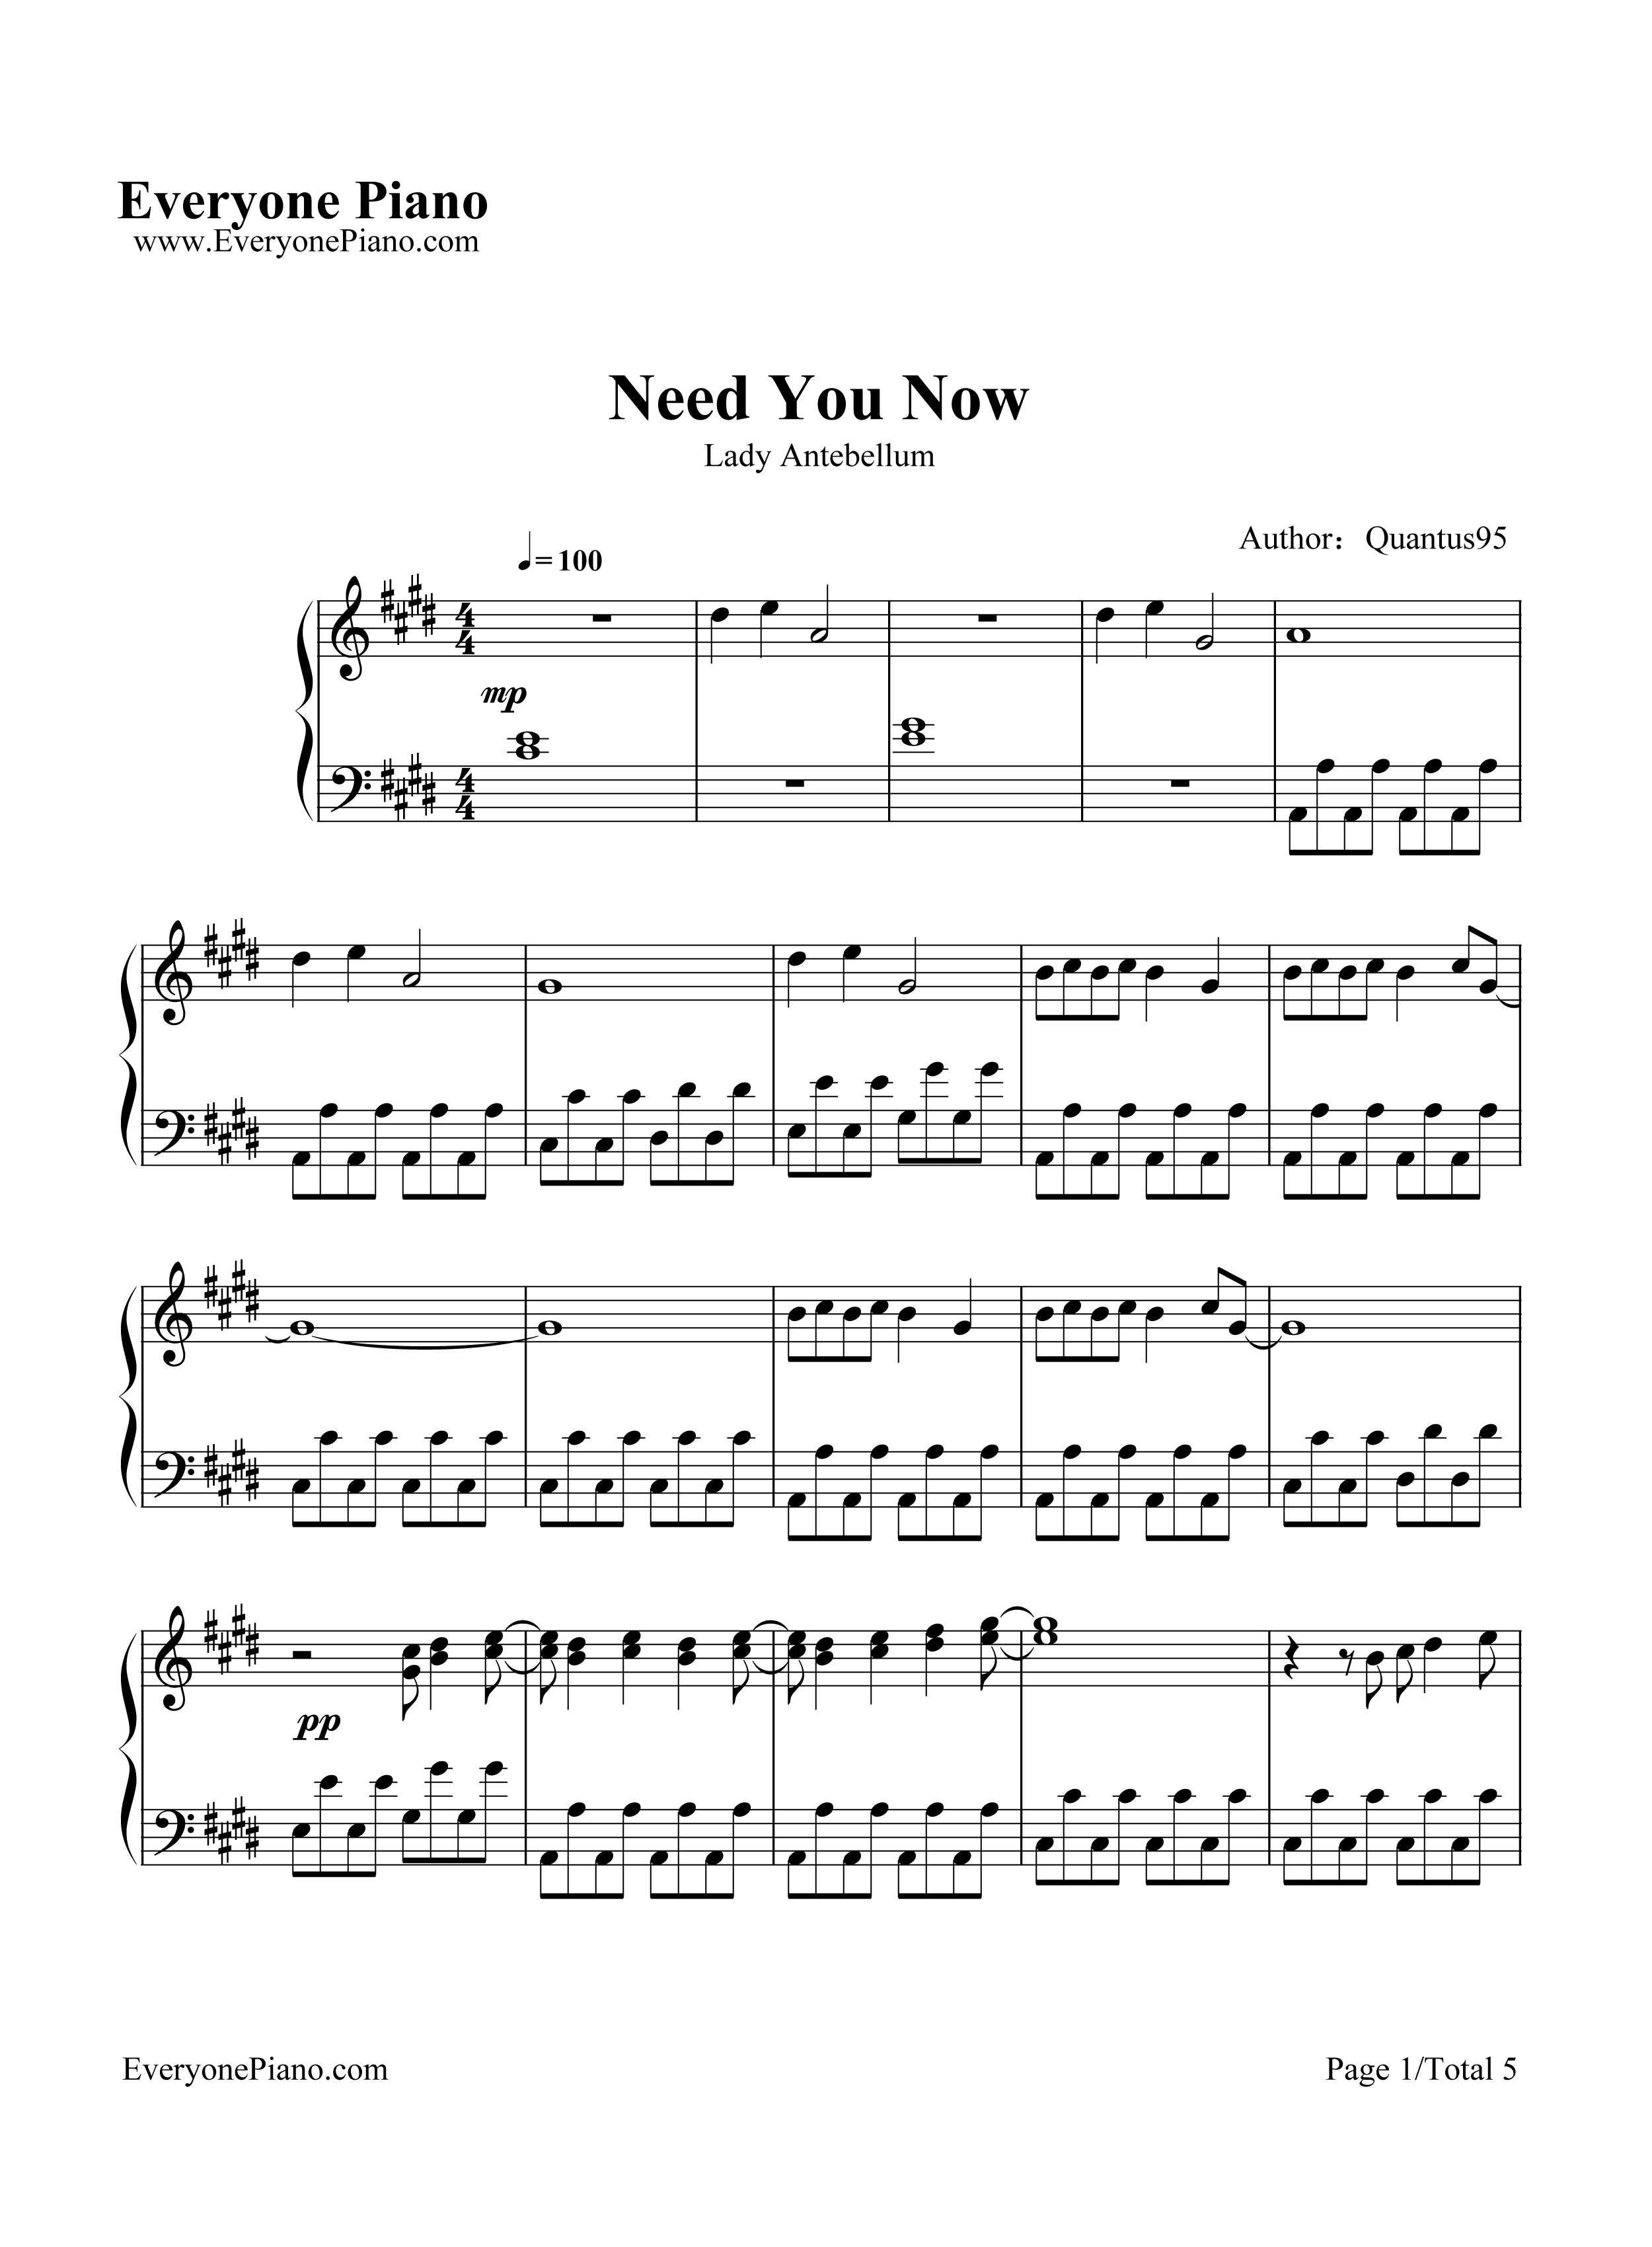 Need_You_Now钢琴谱_Lady_Antebellum